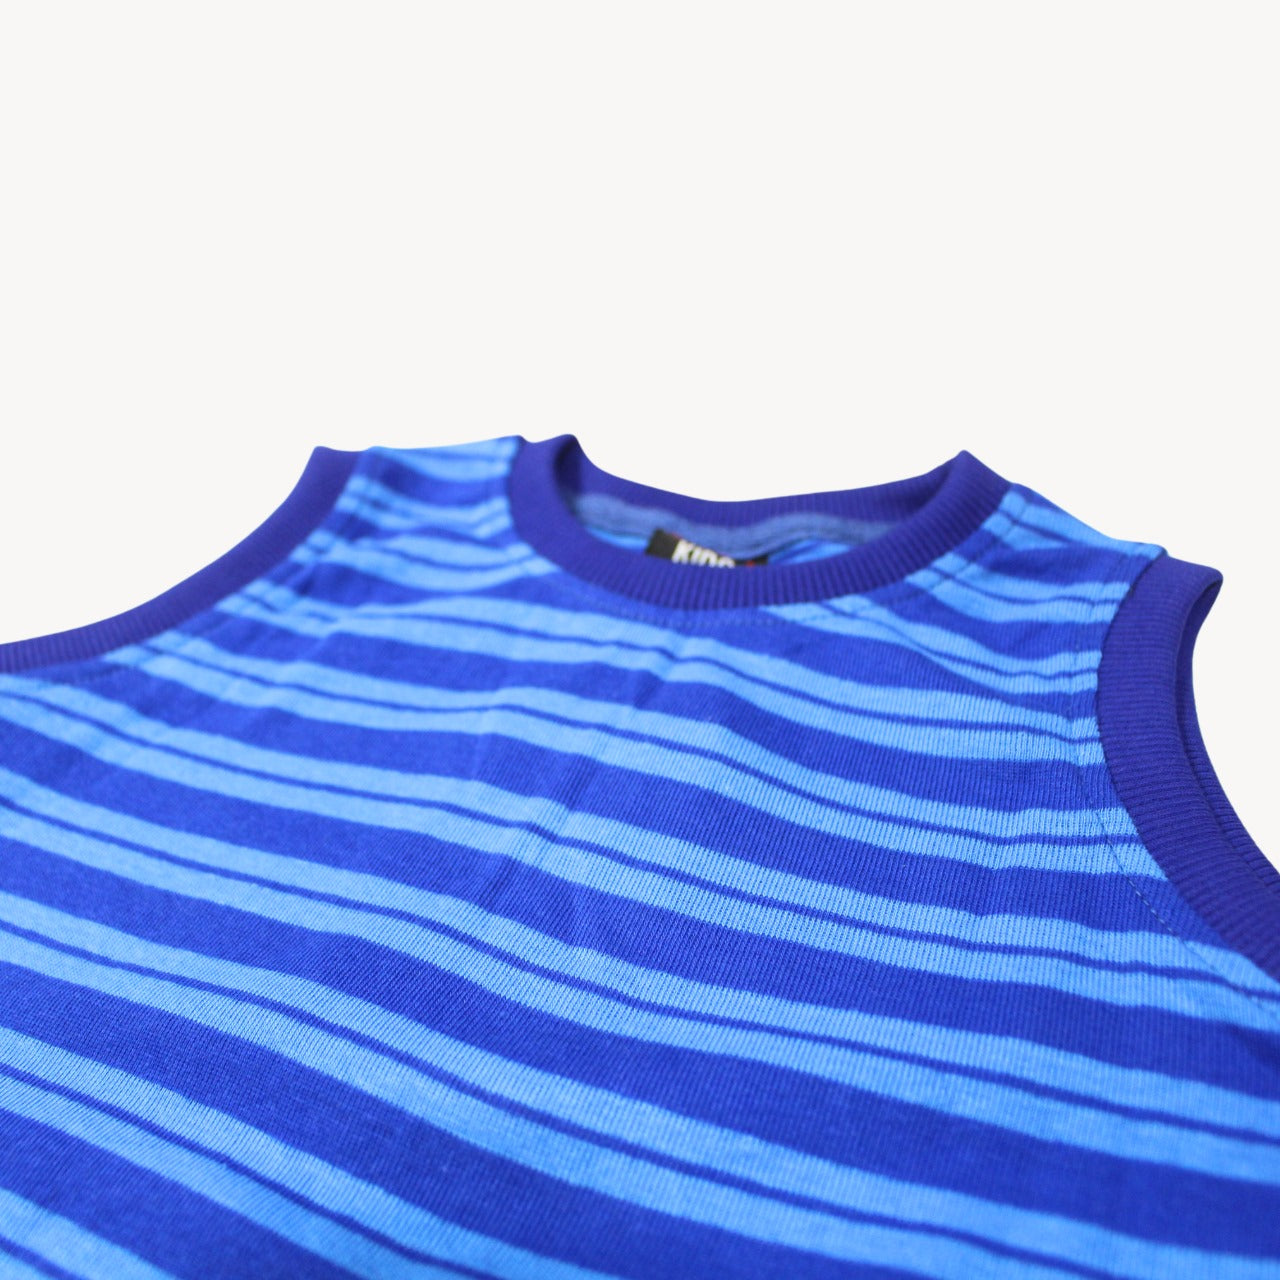 Navy Blue & Light Blue Stripe Sleeveless Shirt & Short Set